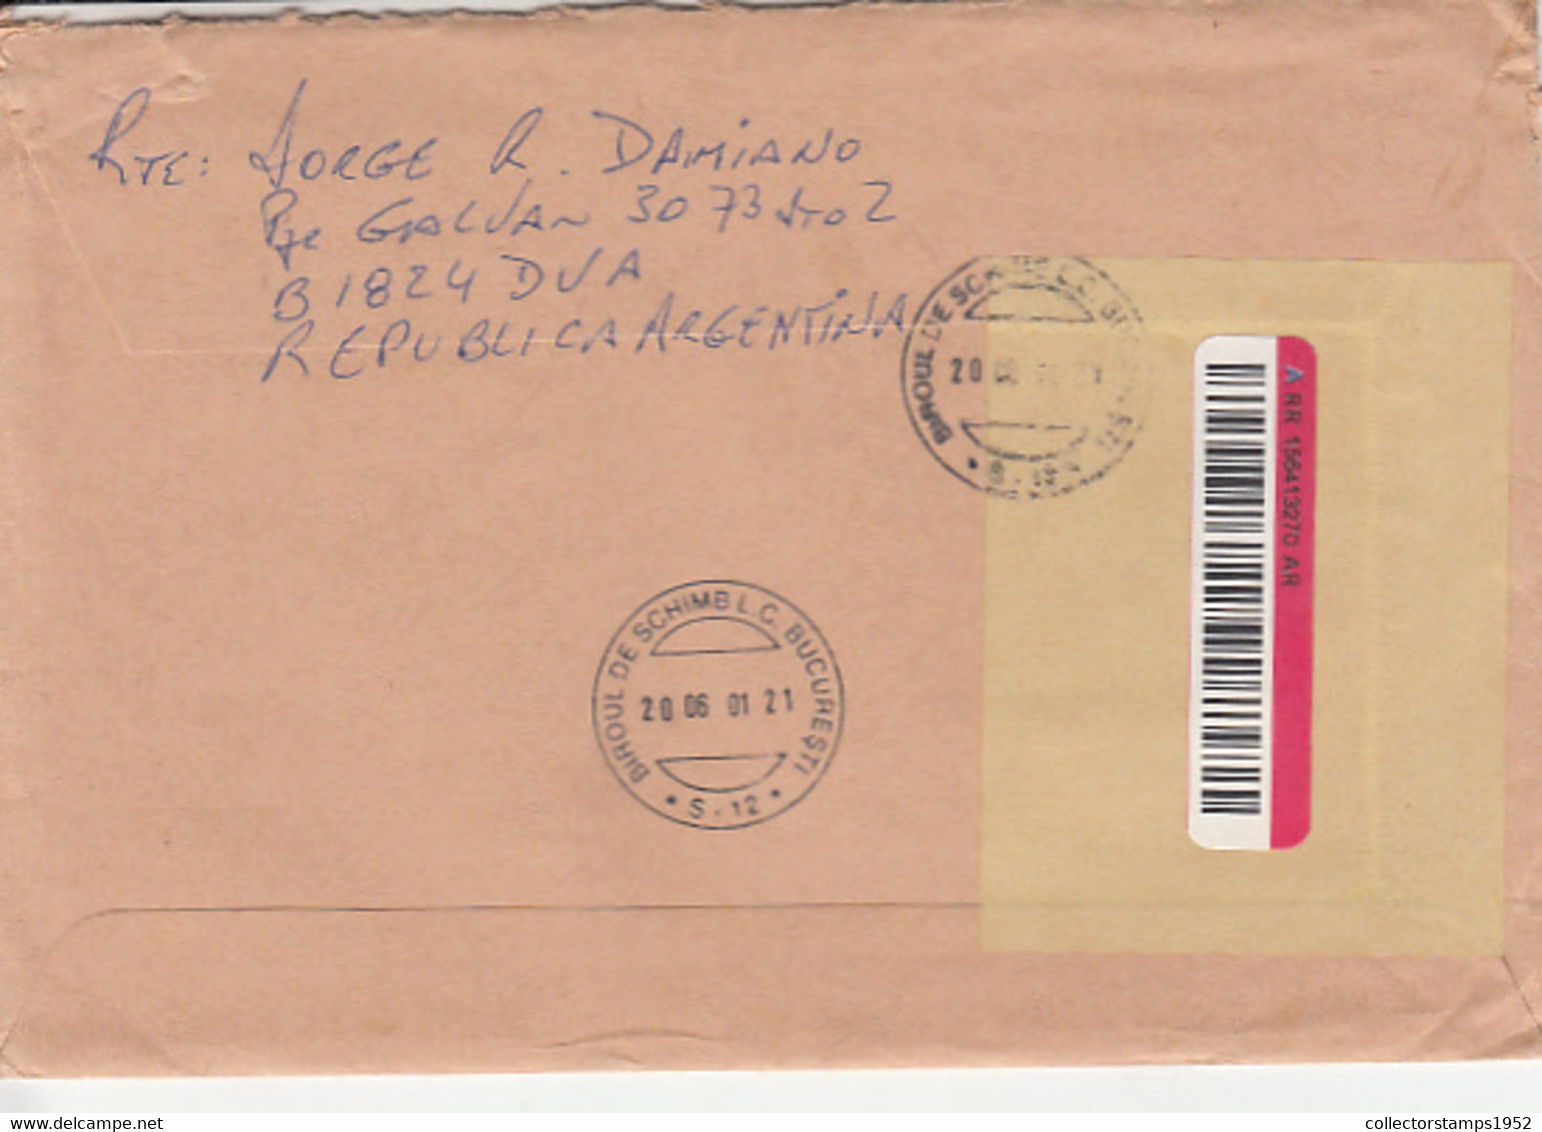 8619FM- BARCODES, AMOUNT 5.25MACHINE PRINTED STICKER STAMP ON REGISTERED COVER, 2001, ARGENTINA - Briefe U. Dokumente